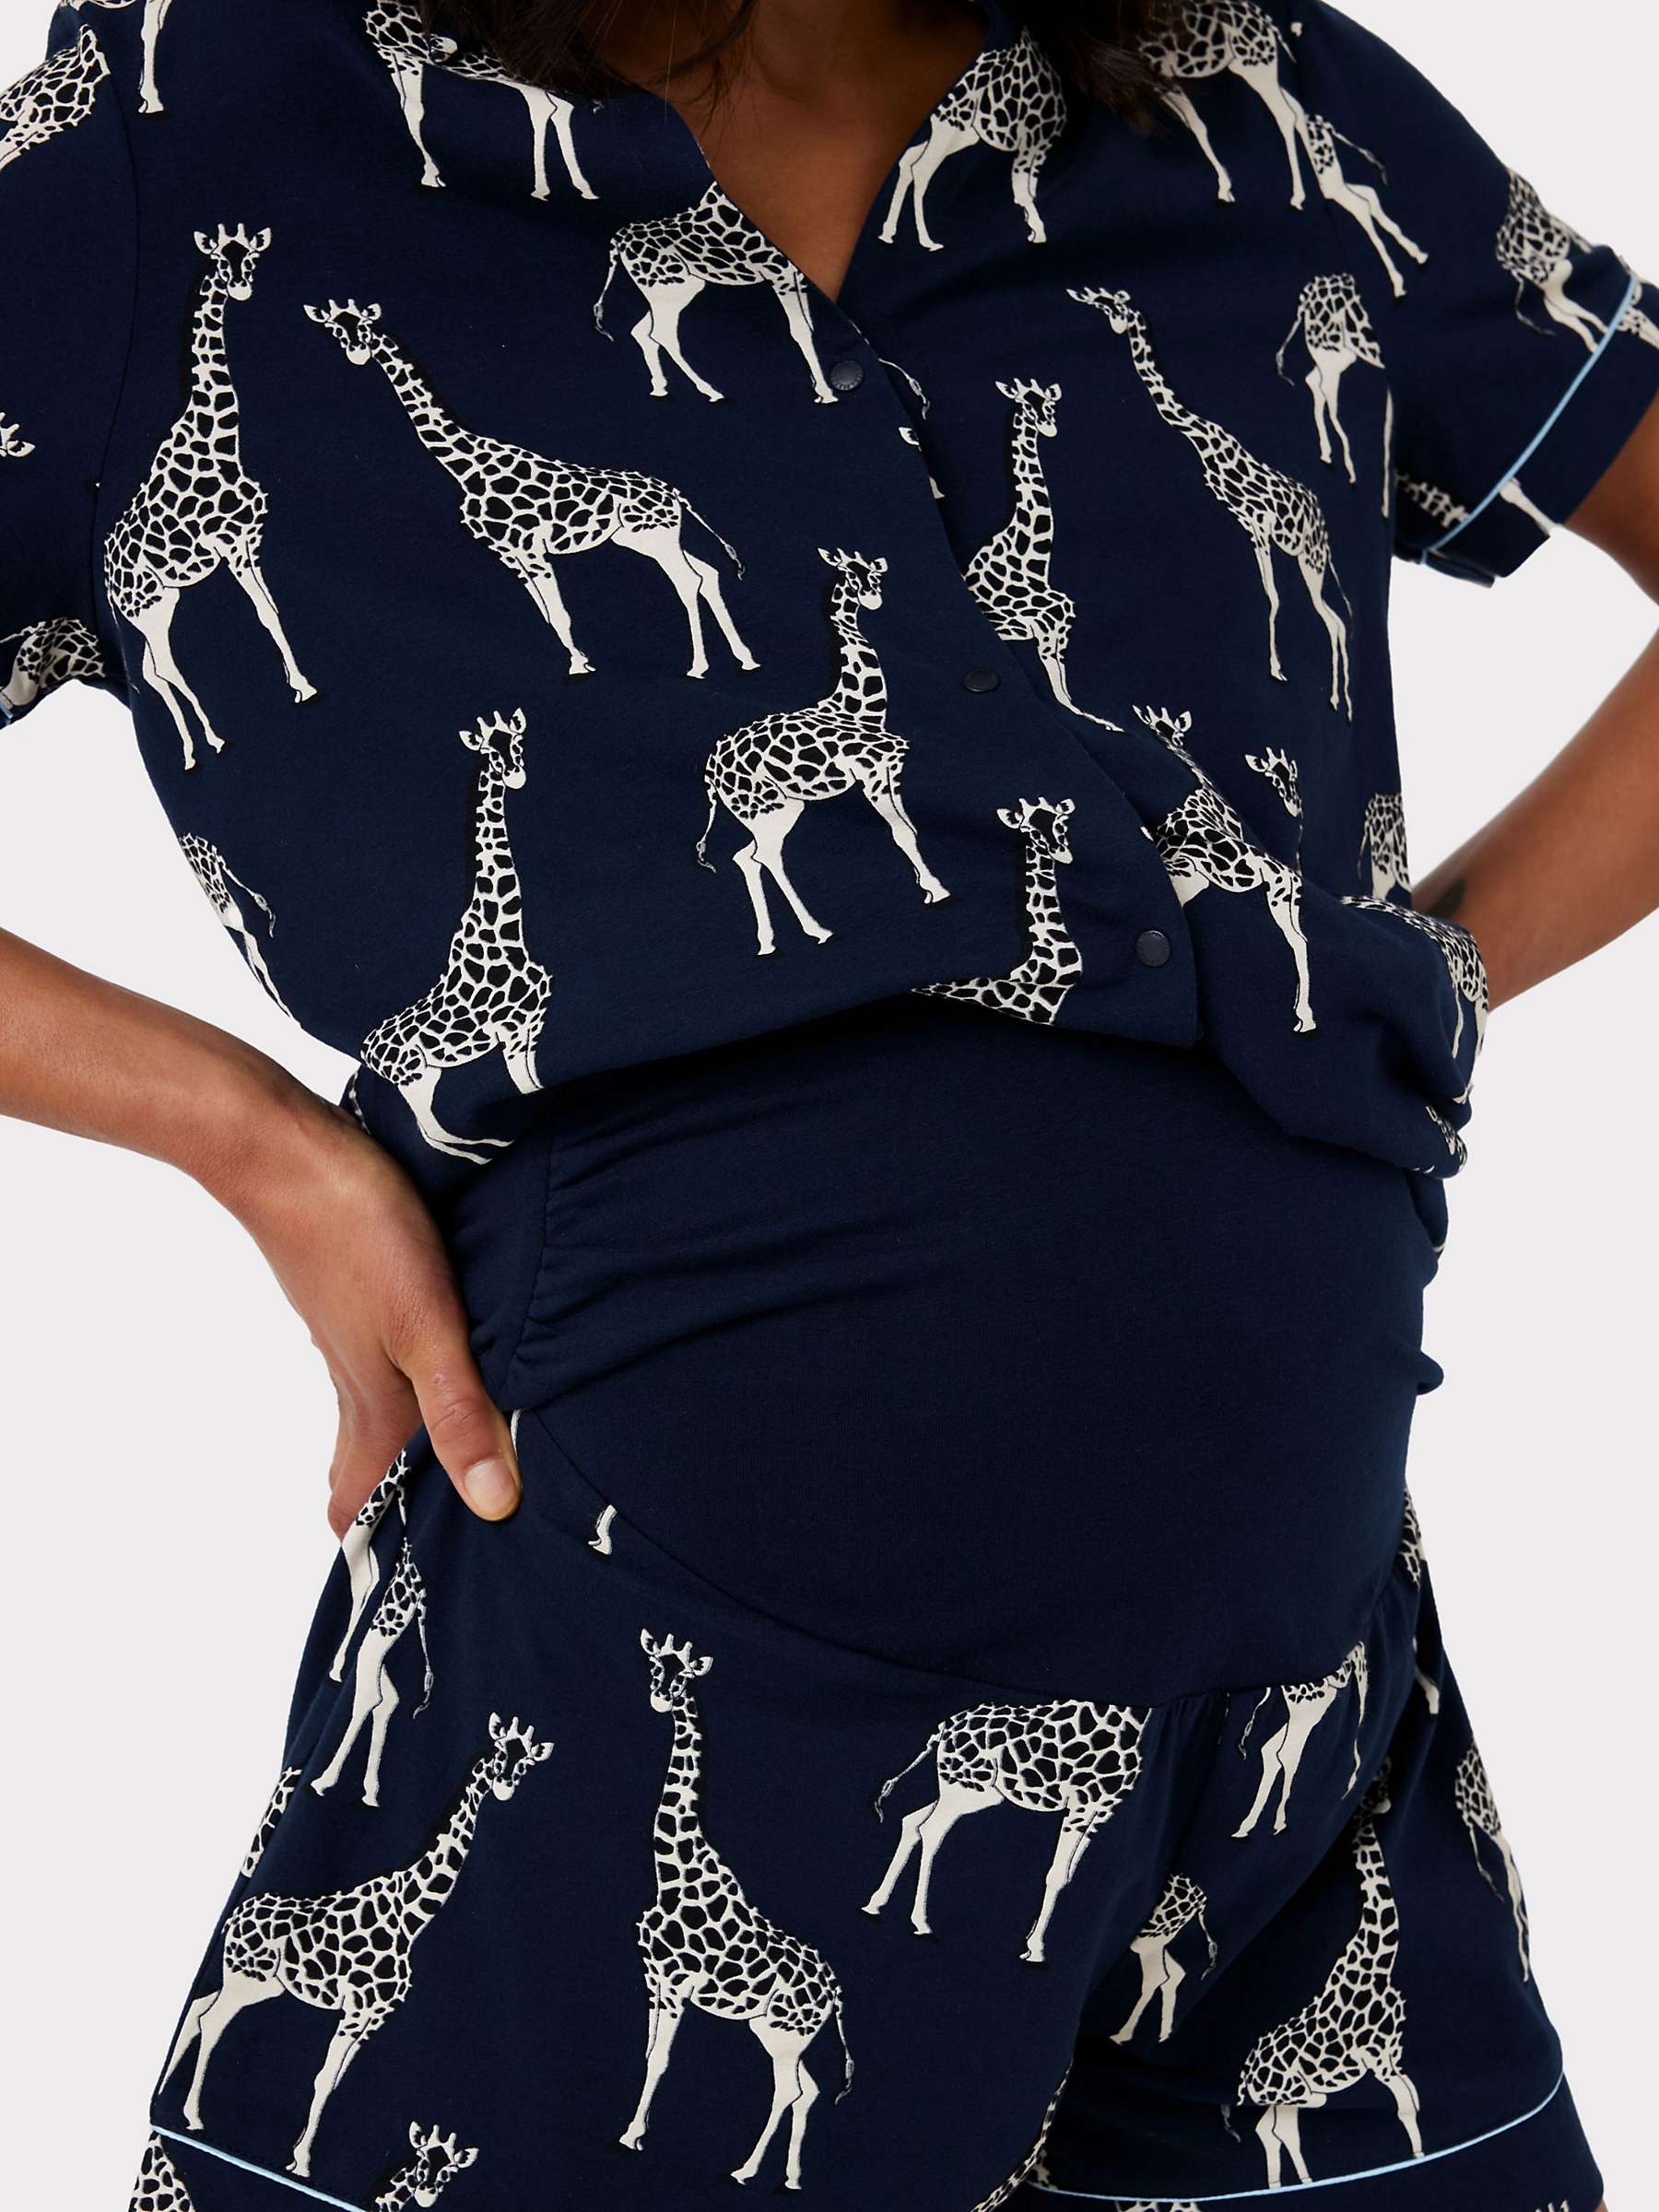 Buy Chelsea Peers Organic Cotton Blend Giraffe Print Shorts Maternity Pyjama Set, Navy Online at johnlewis.com